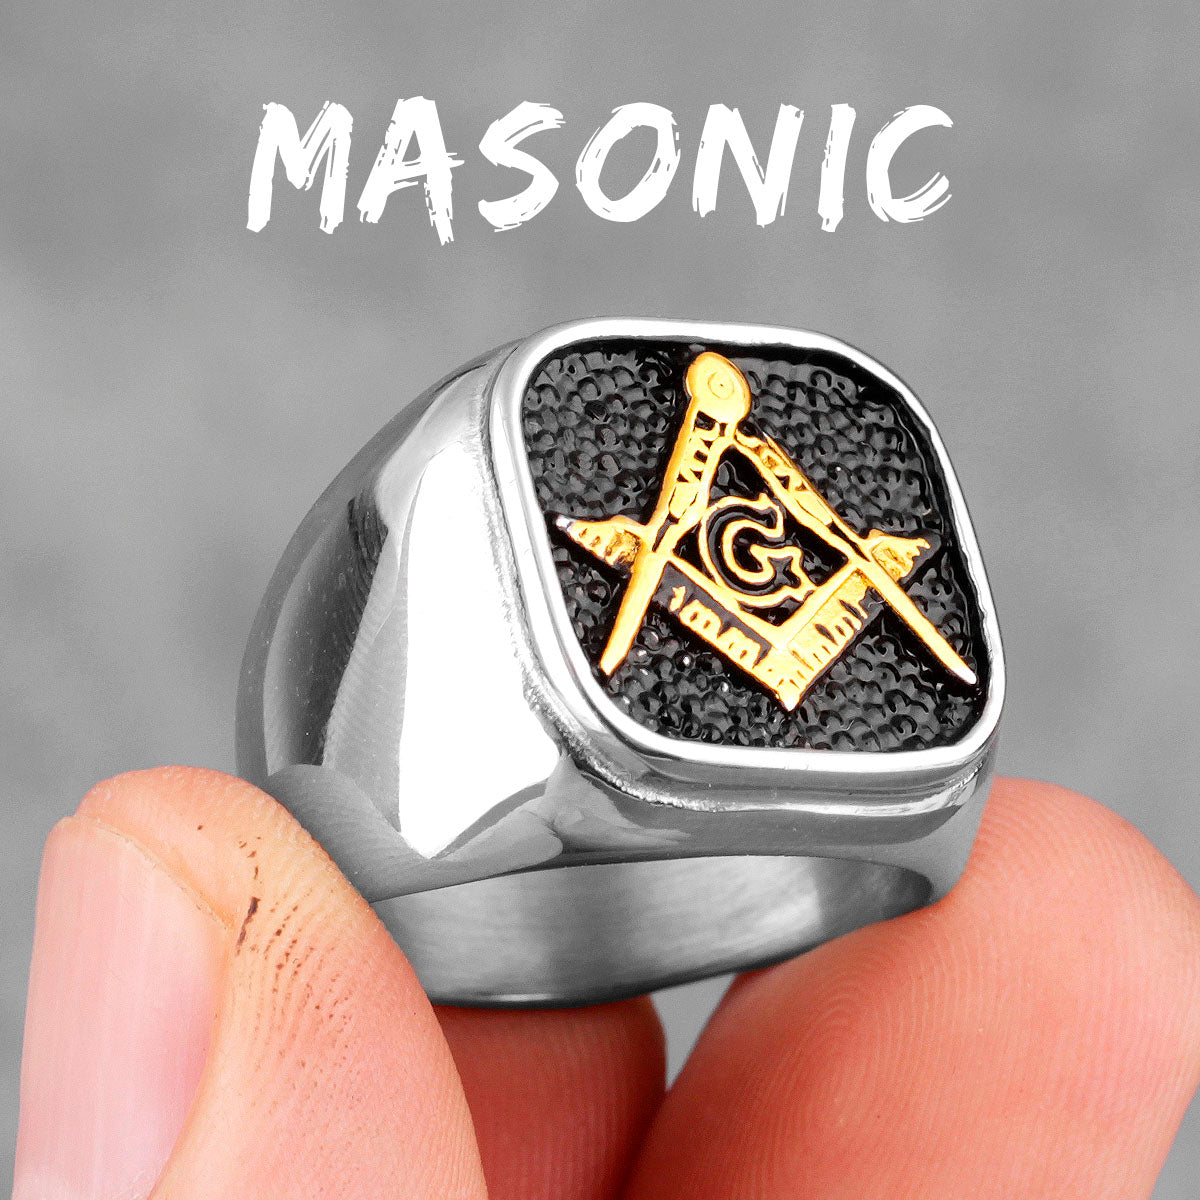 Master Mason Blue Lodge Ring - Classic Compass & Square - Bricks Masons